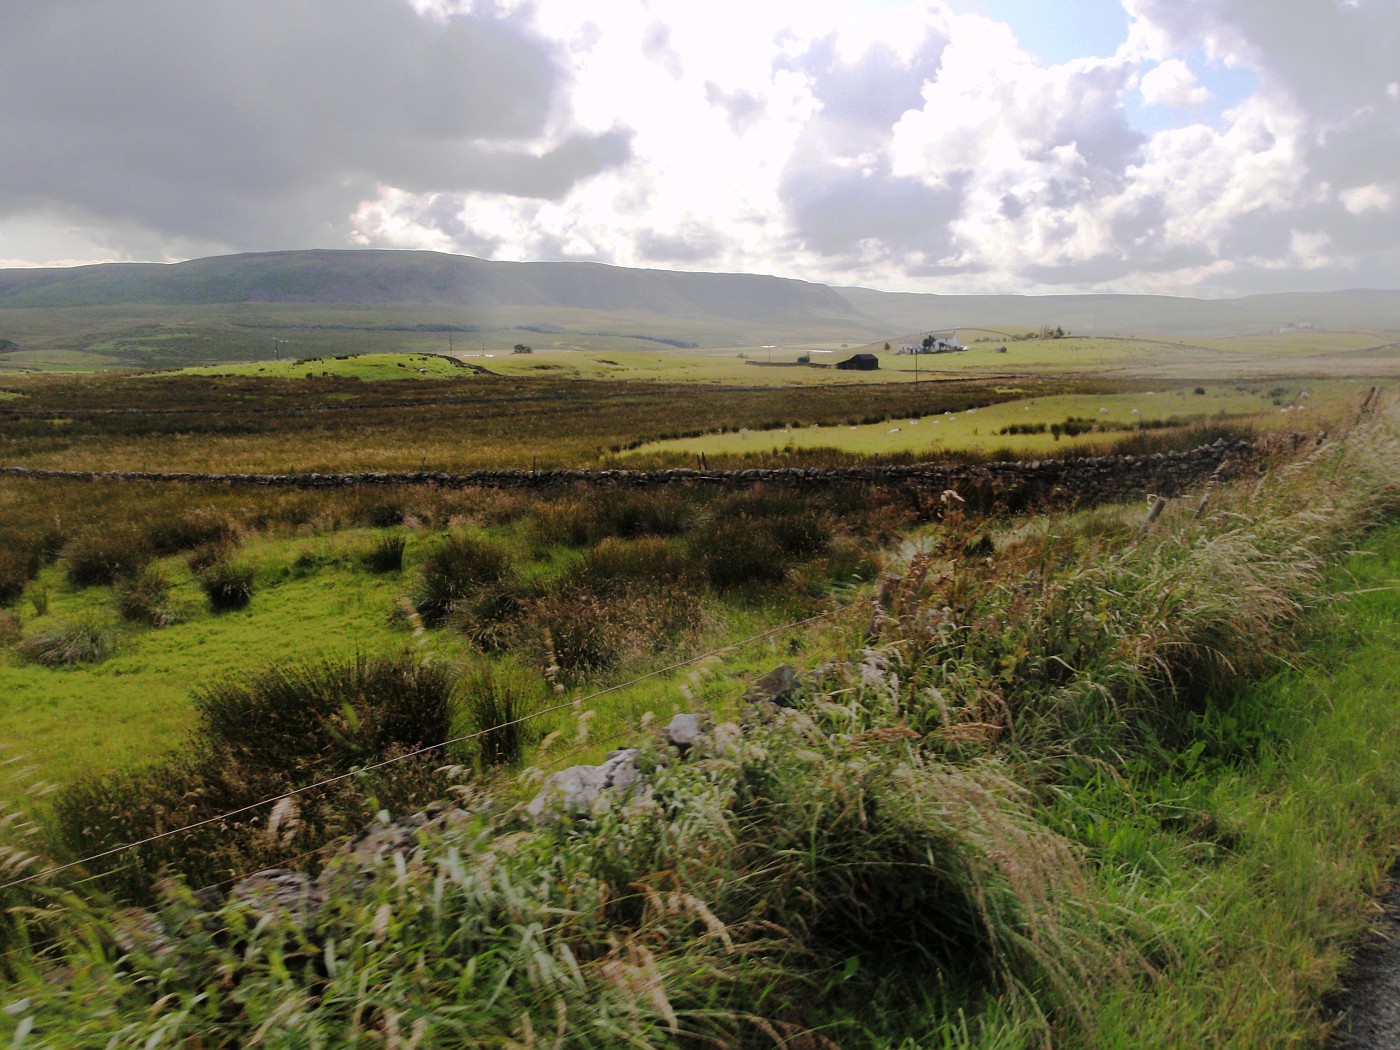 Landscape of Cumbria, England